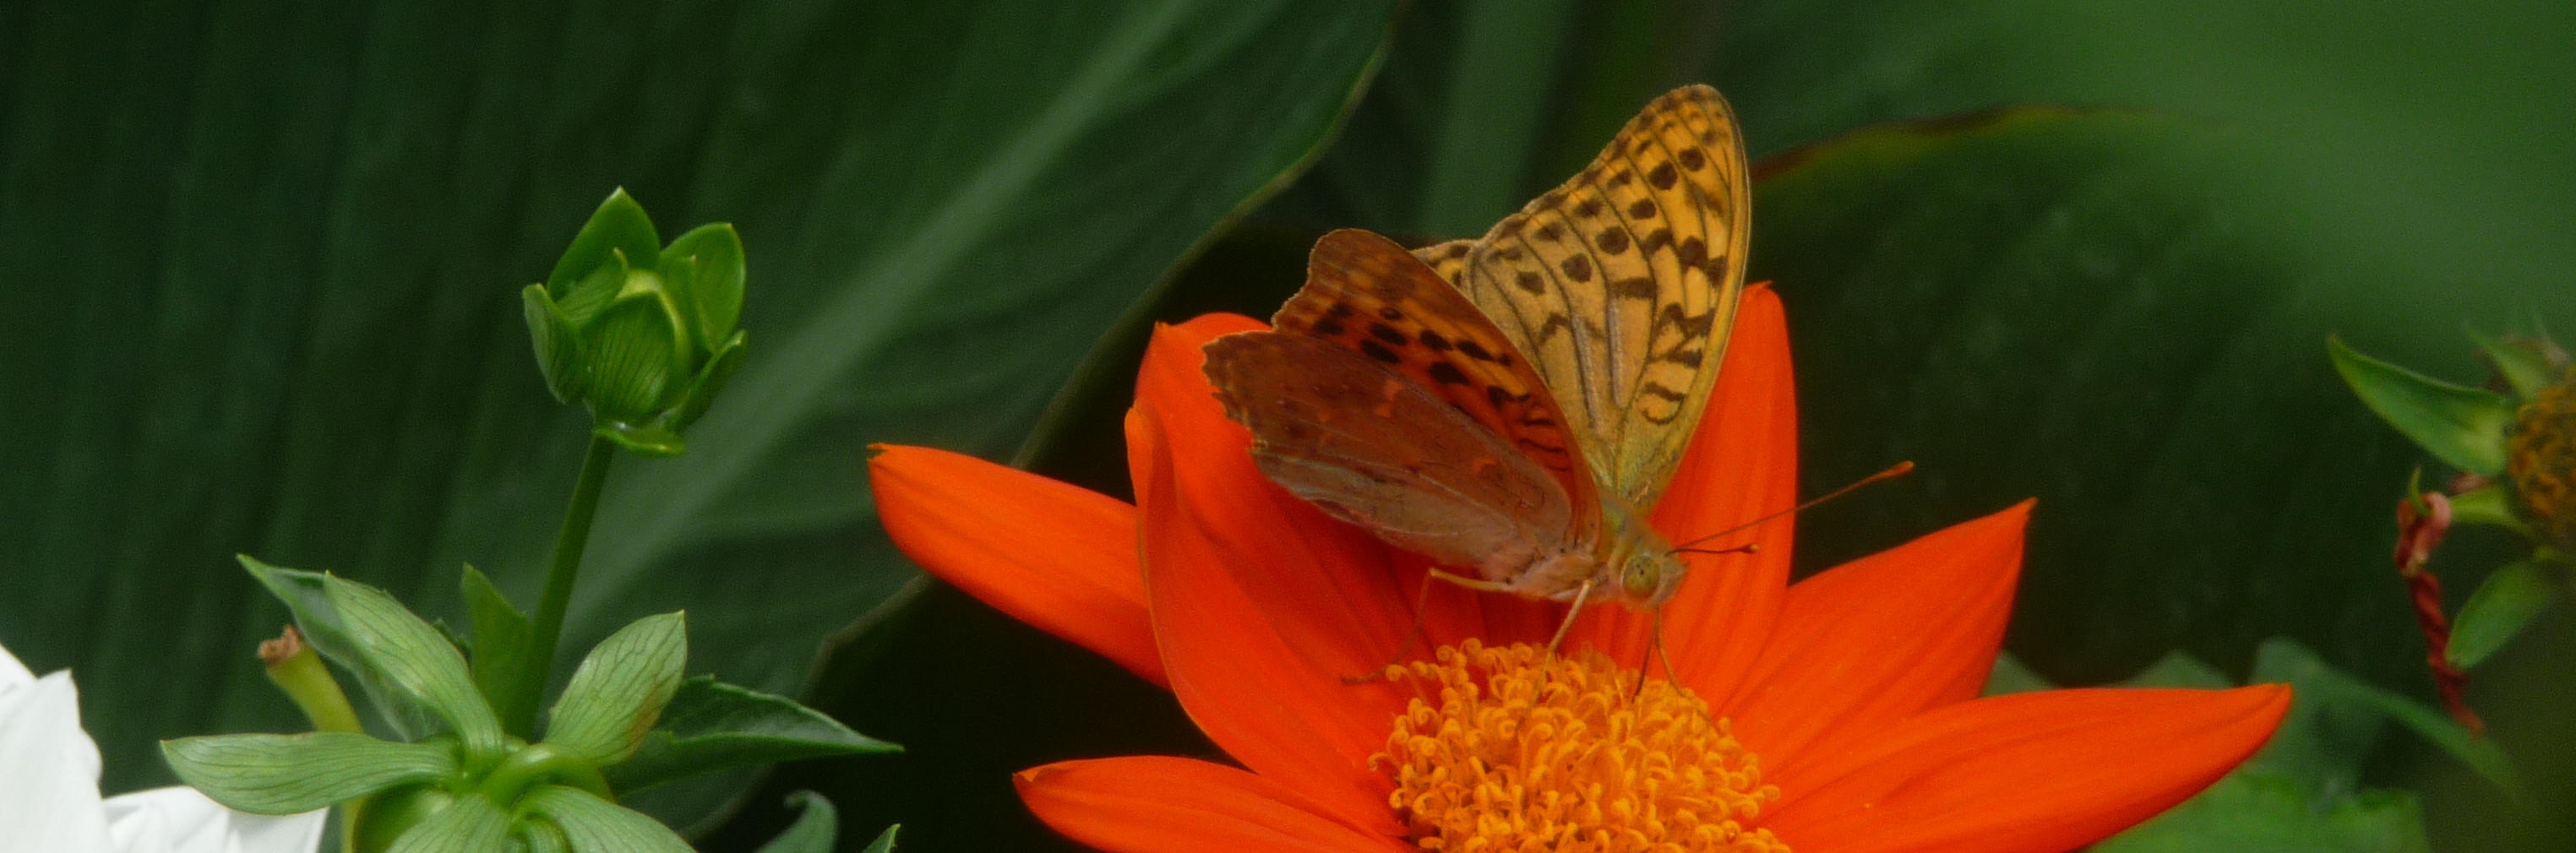 4.vlinder_bloem-Claudia.D kopie